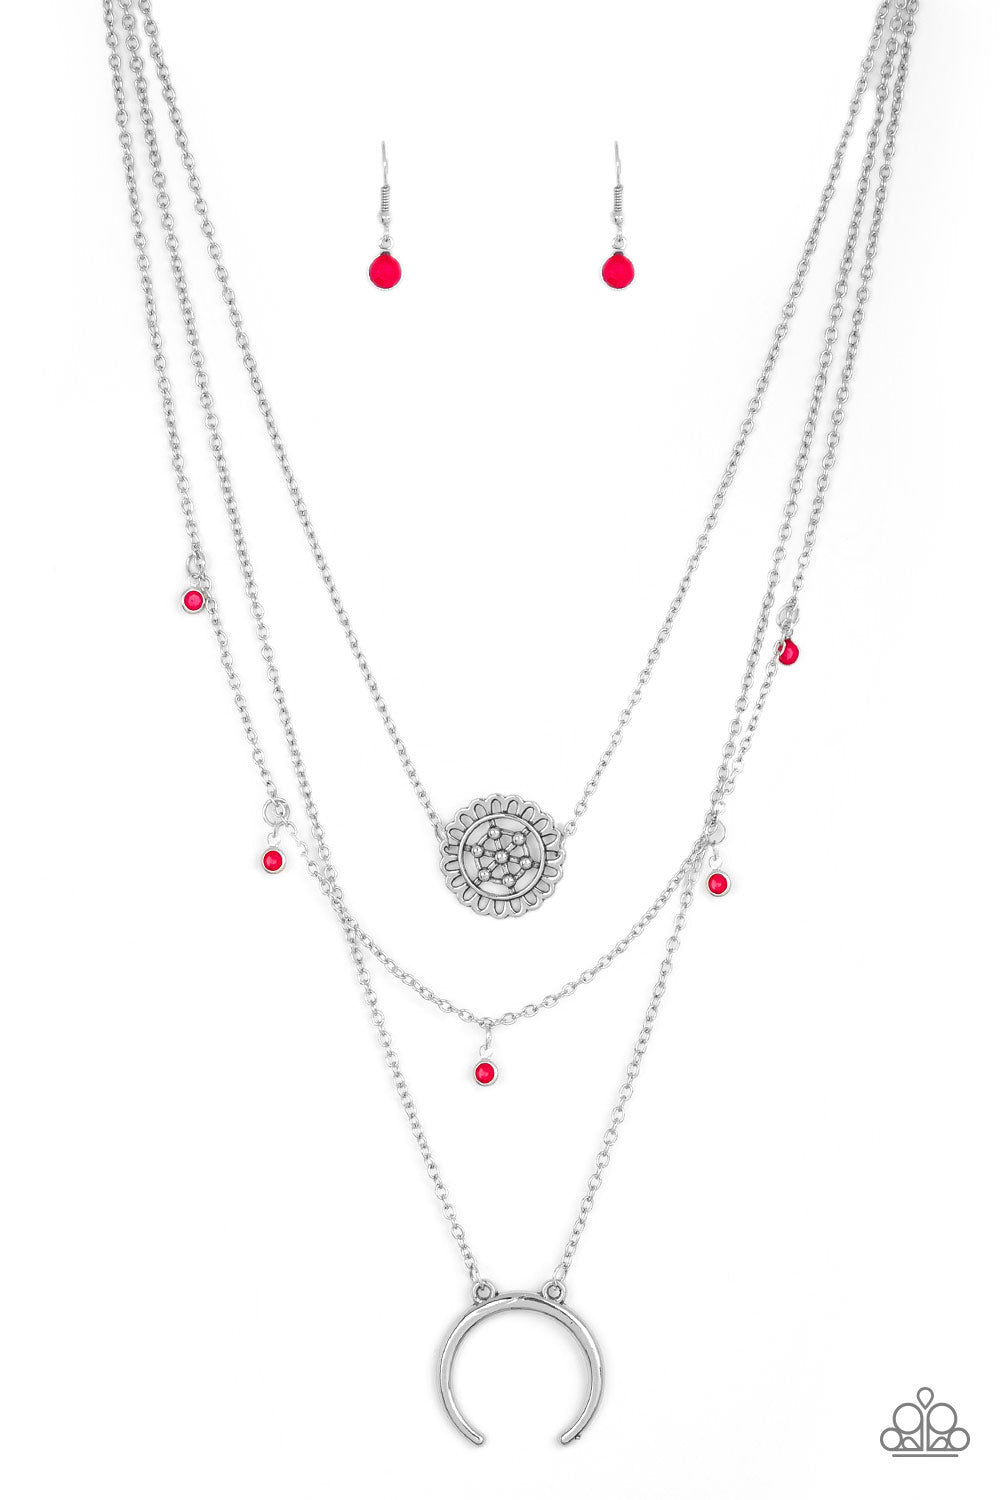 Lunar Lotus - Pink Necklace Set - Princess Glam Shop